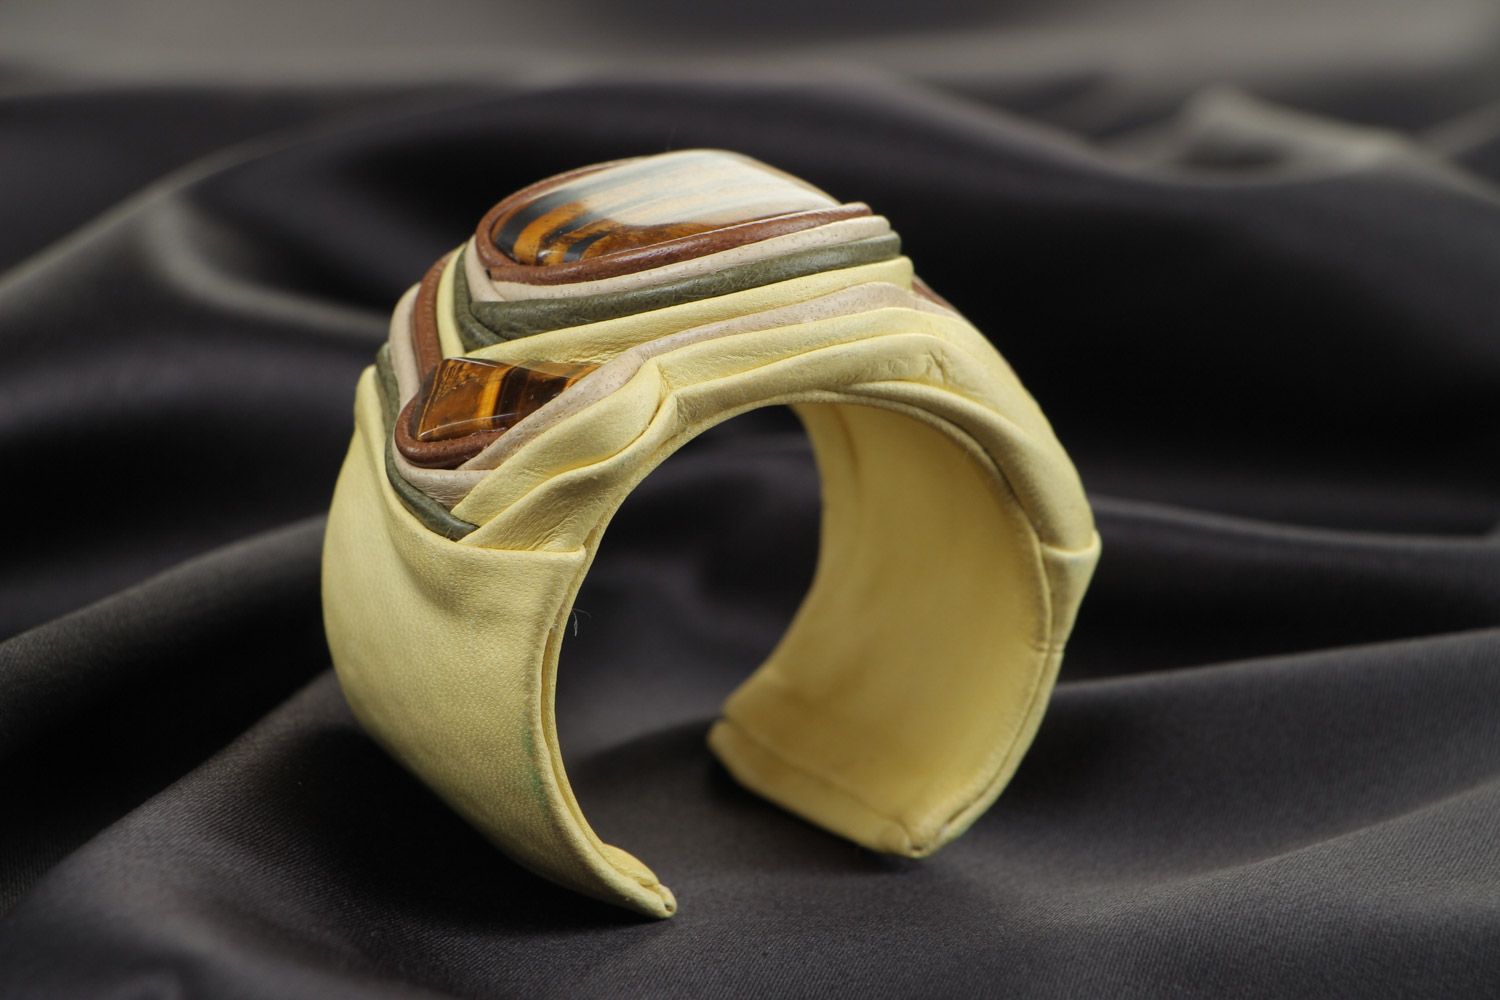 Handmade wide leather bracelet in light color with jaspilites stone adjustable size photo 1